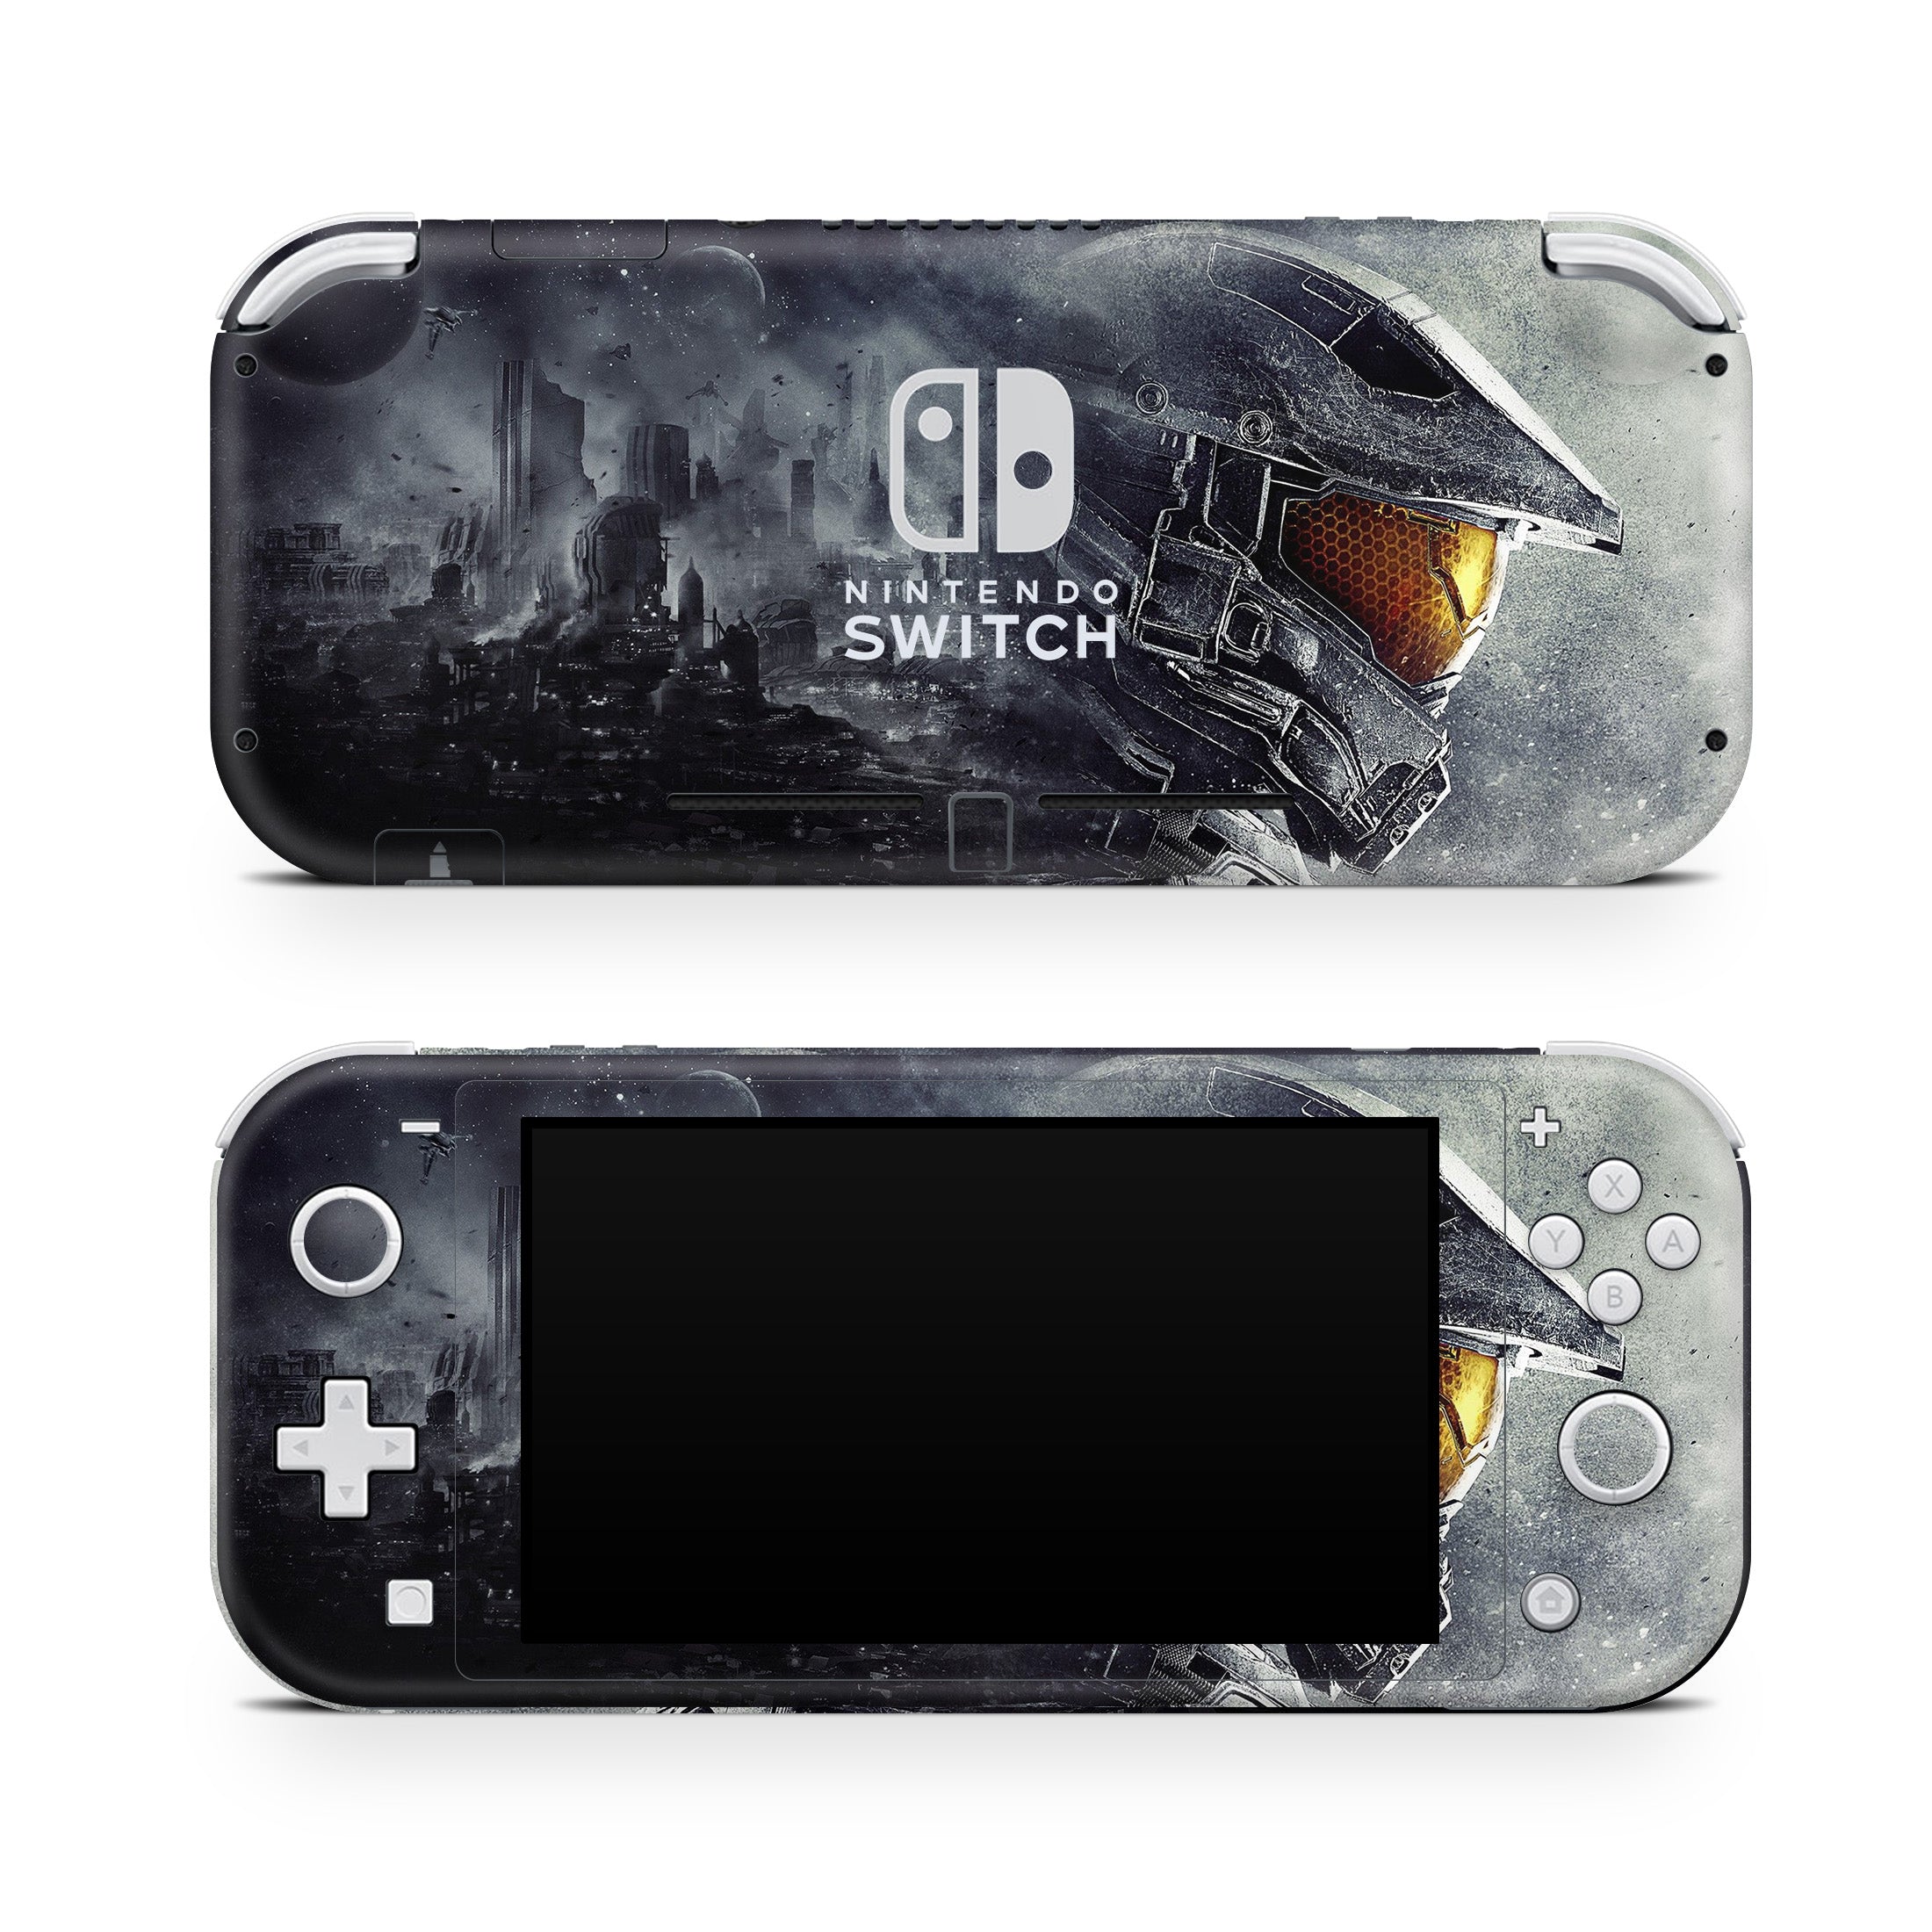 Halo Nintendo Switch Skin (Version 2)